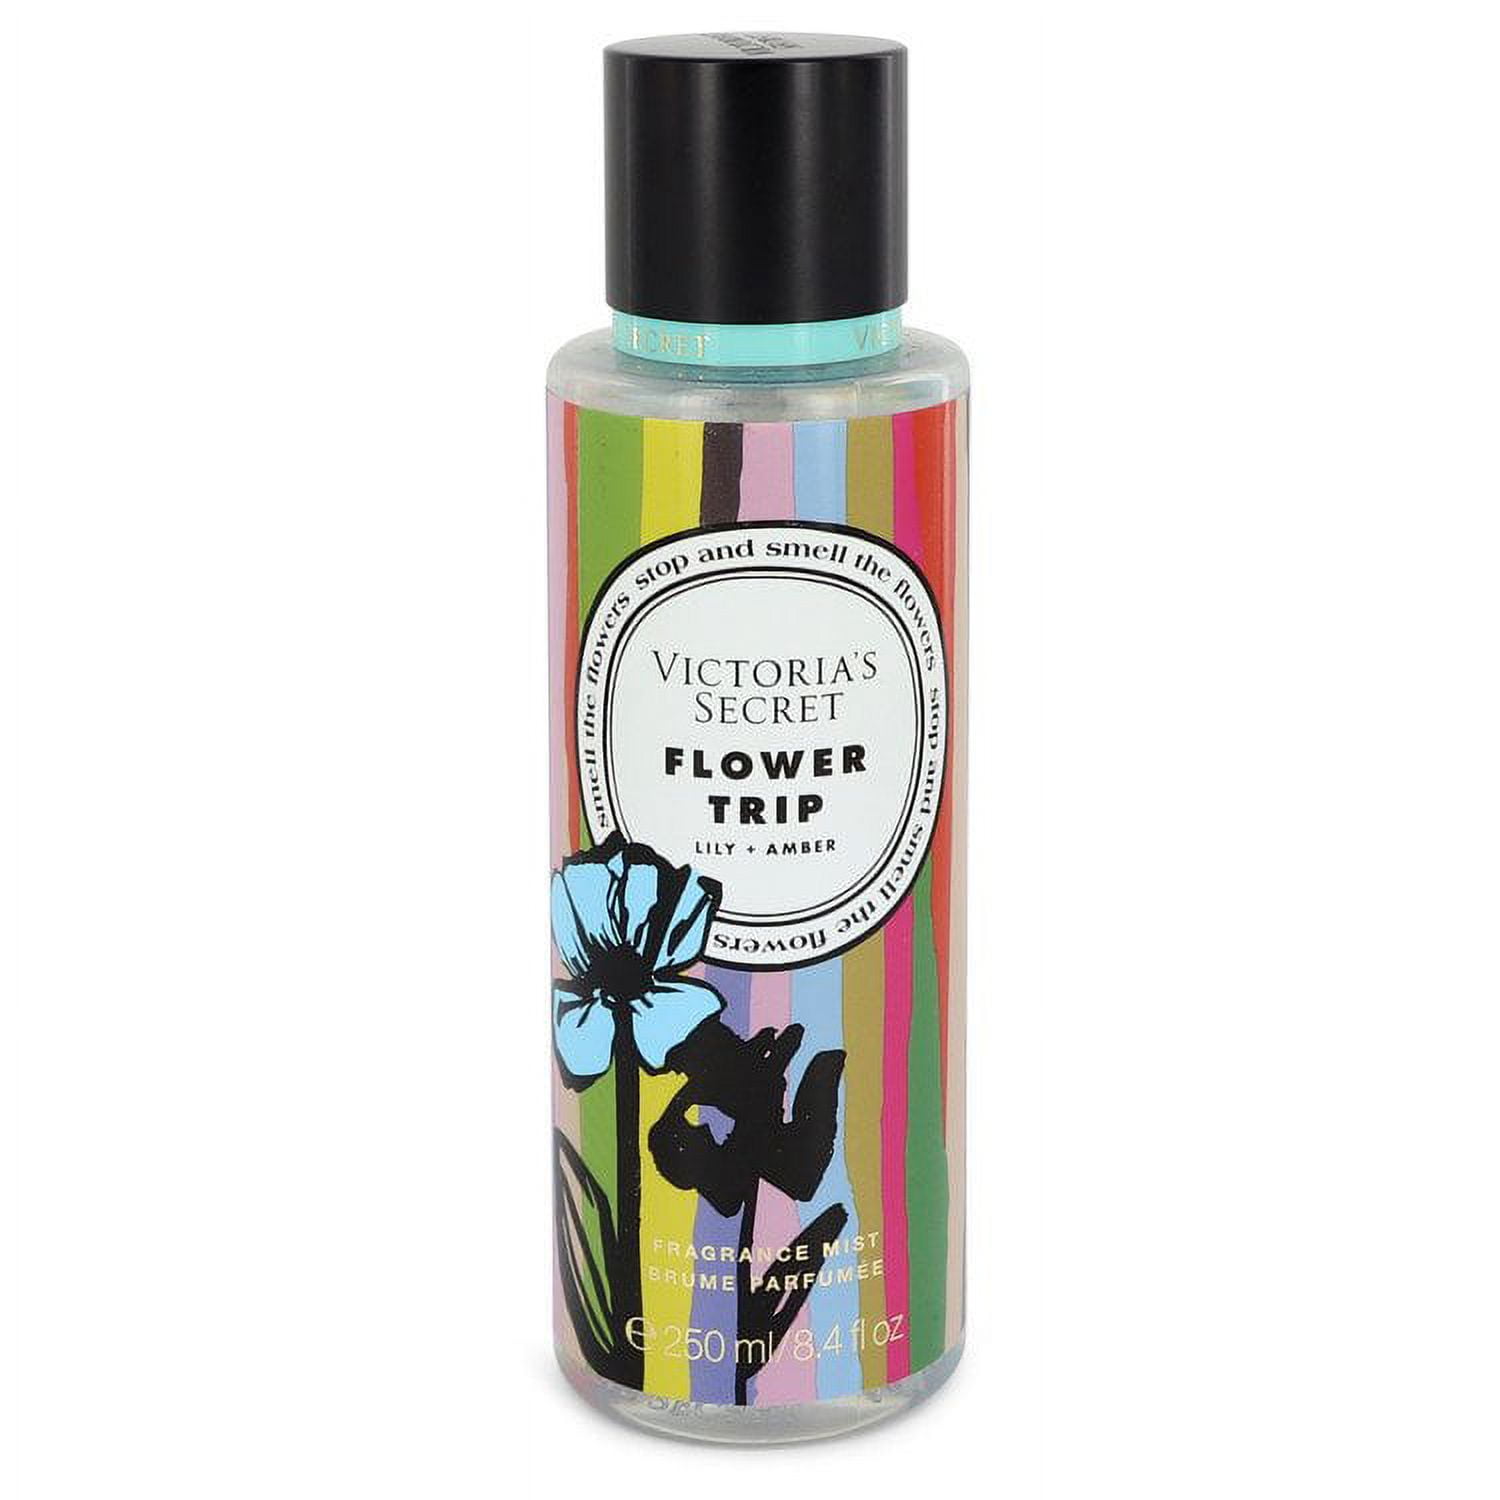 Lady's Secret Fragrance Mist Wild Flower – MISSARI